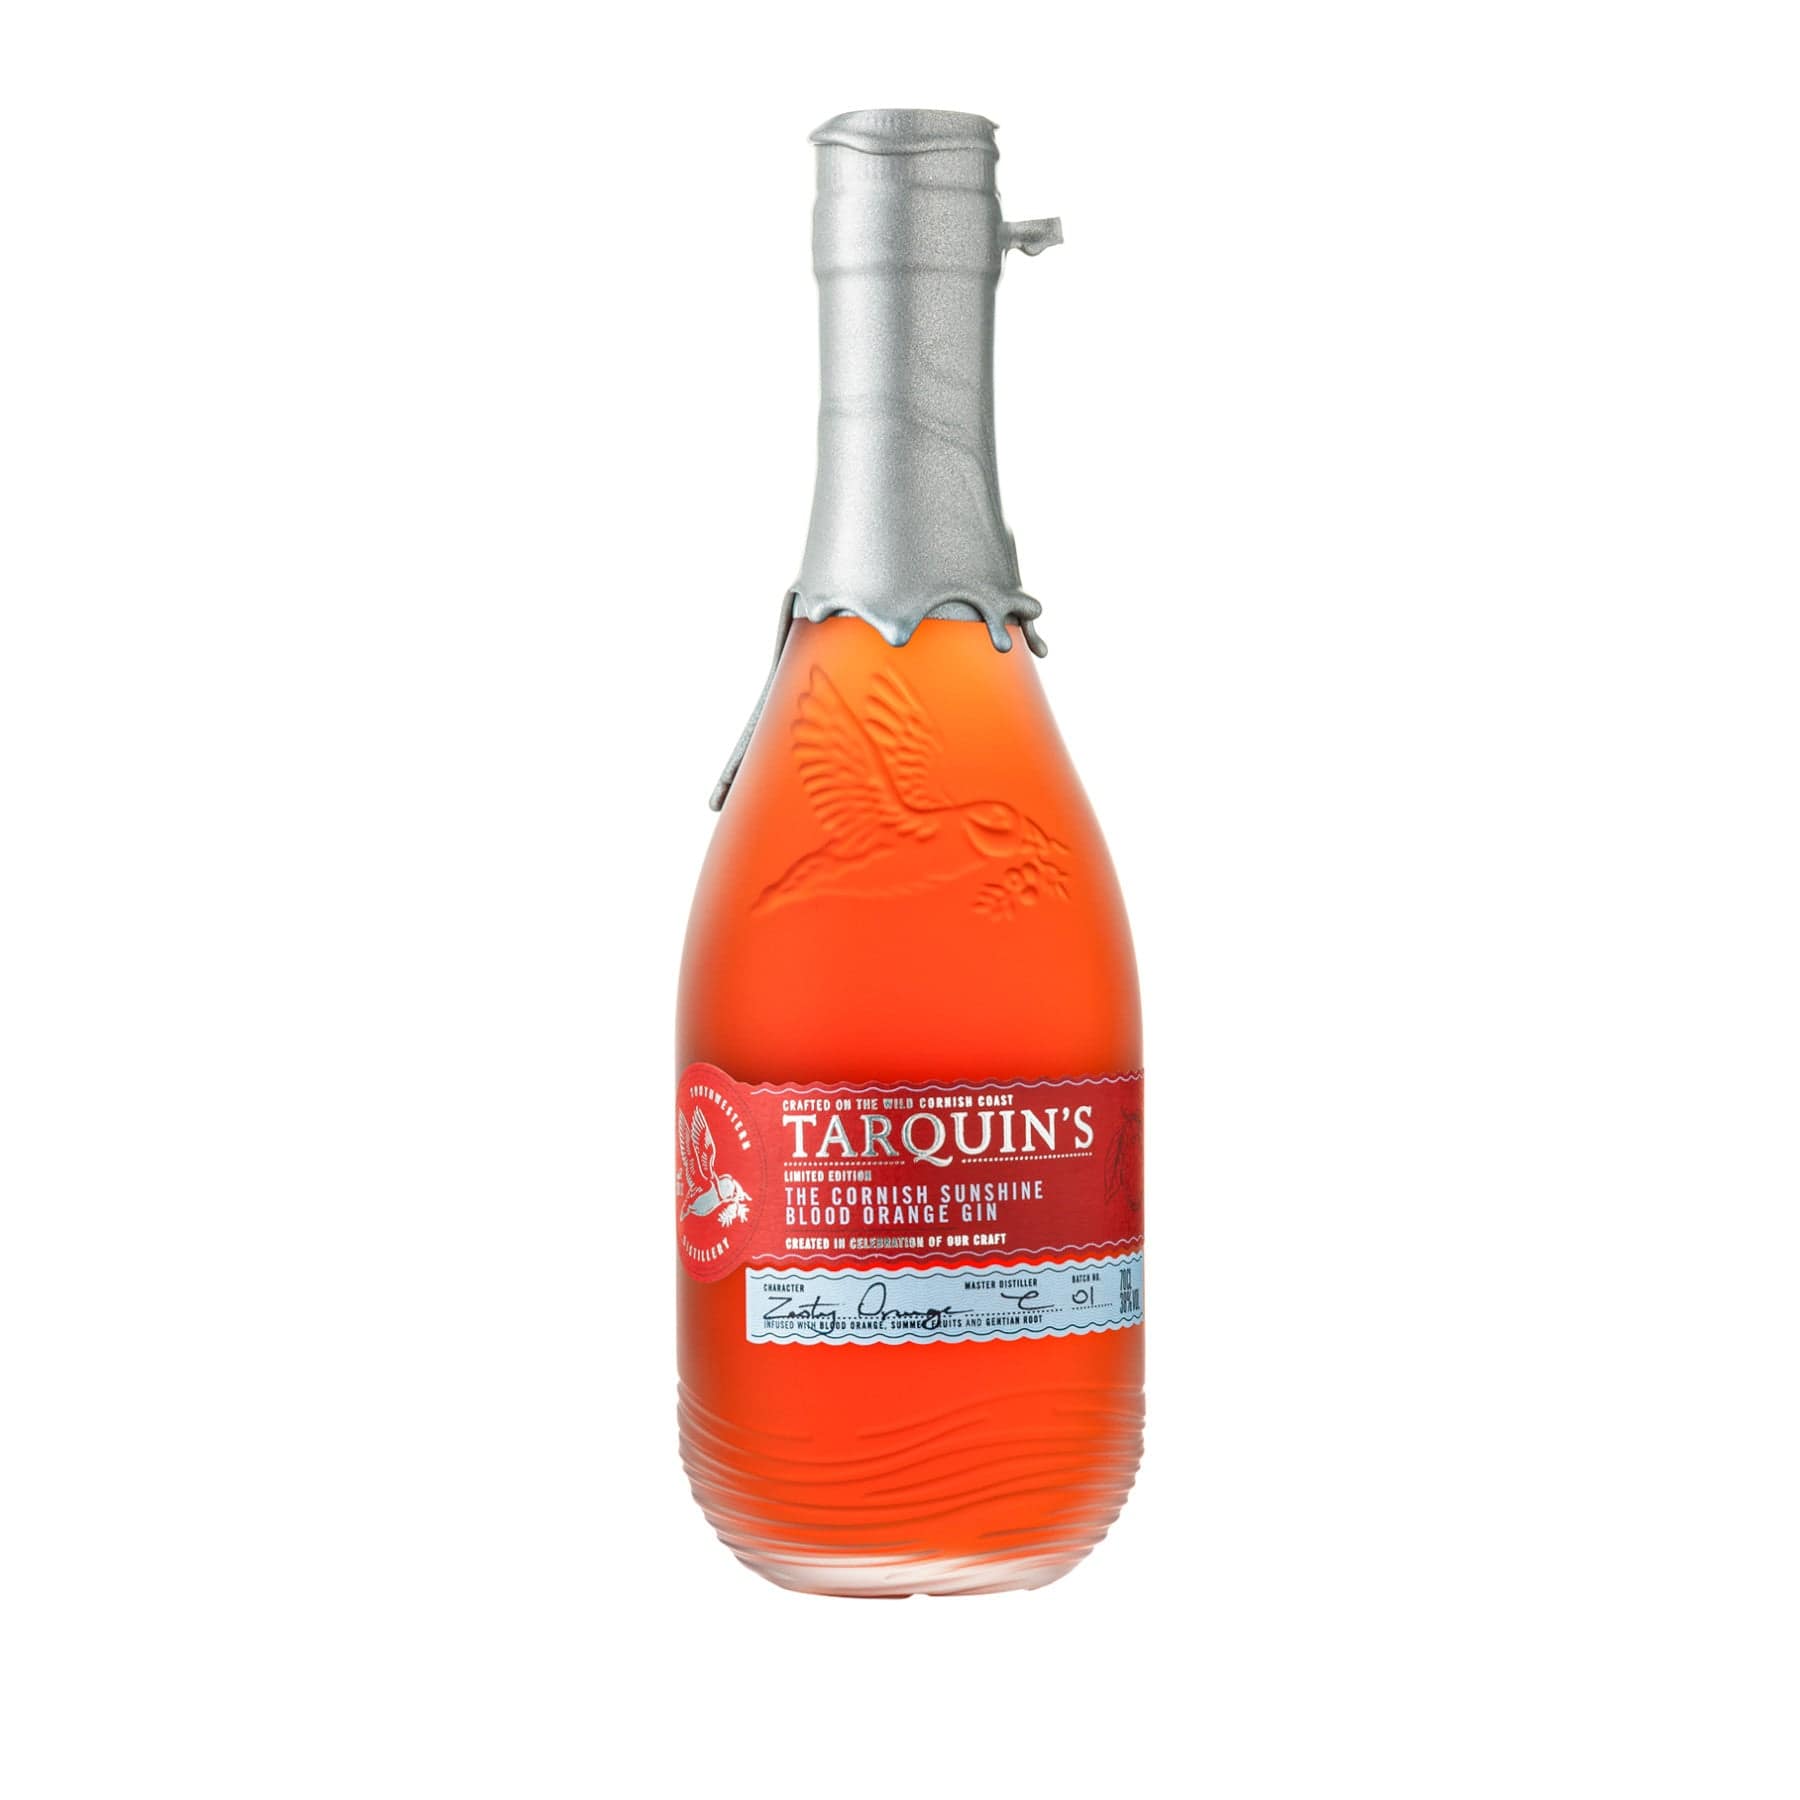 Tarquin's Cornish Sunshine Blood Orange Gin bottle, vibrant orange gin, sealed with foil, white background